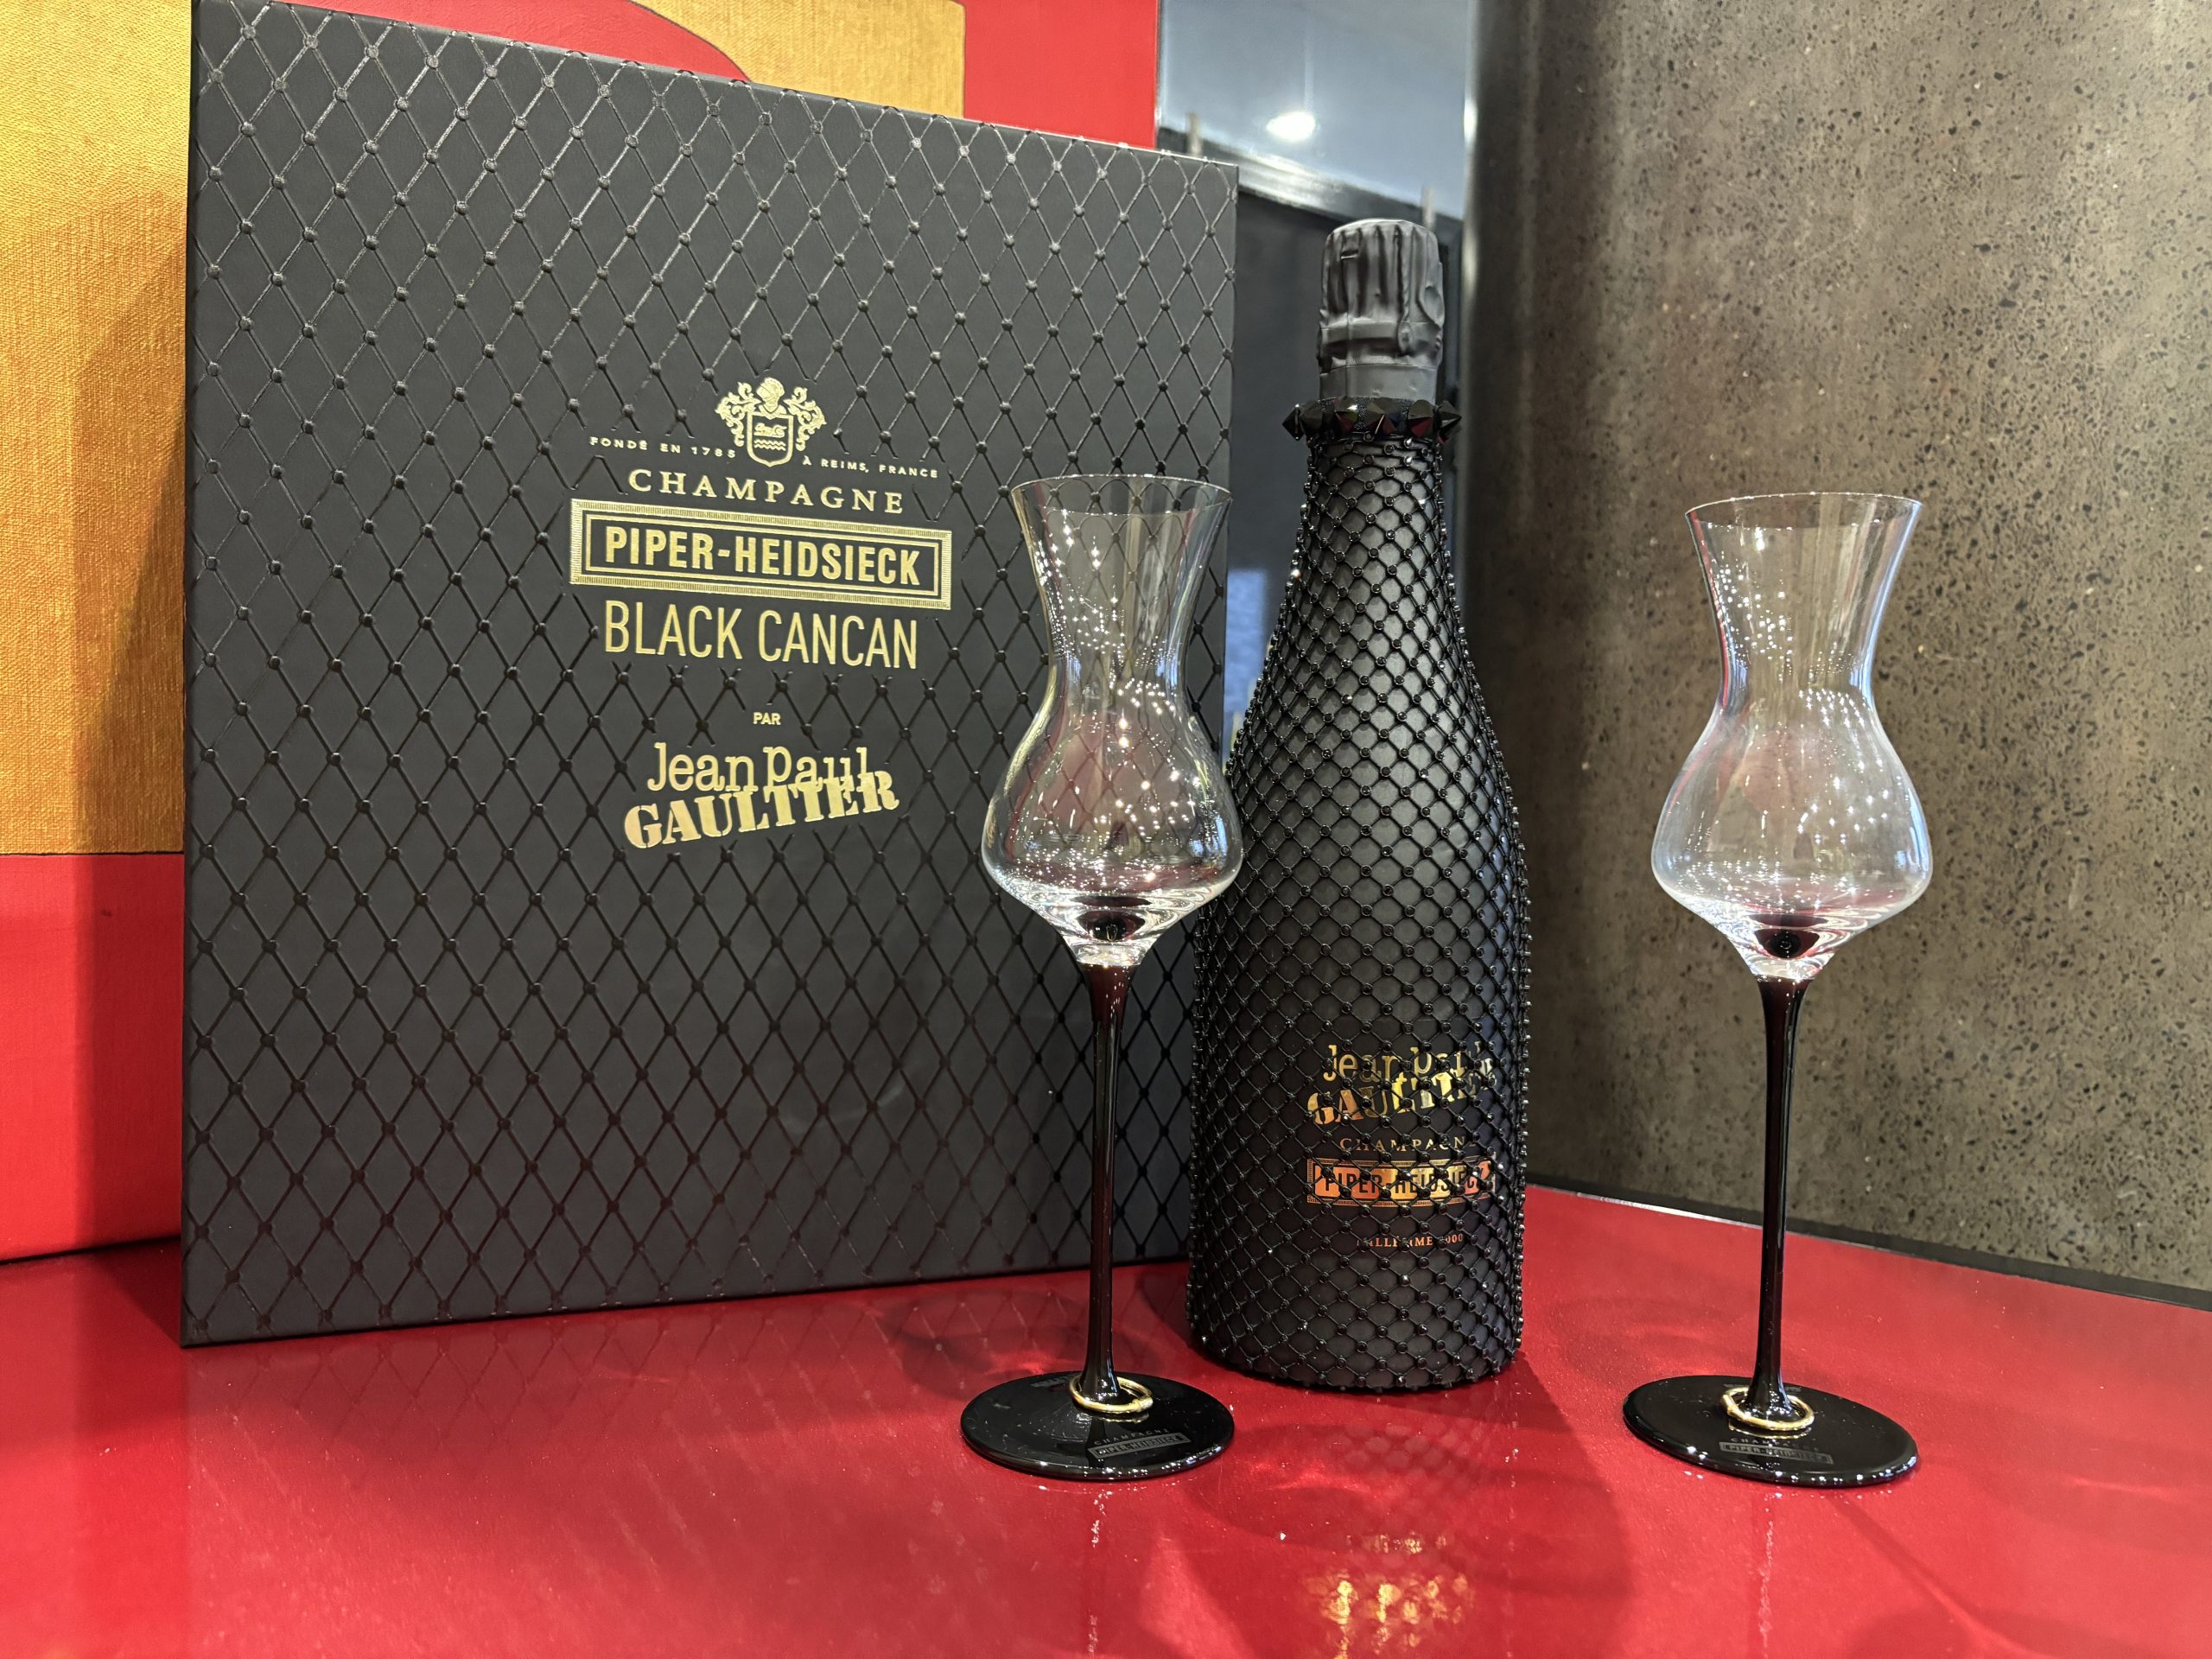 Jean Paul Gaultier – Black Cancan Piper-Heidsieck Millesime Vintage 2000 champagne – Eredeti díszdobozában – 253.500.-Ft